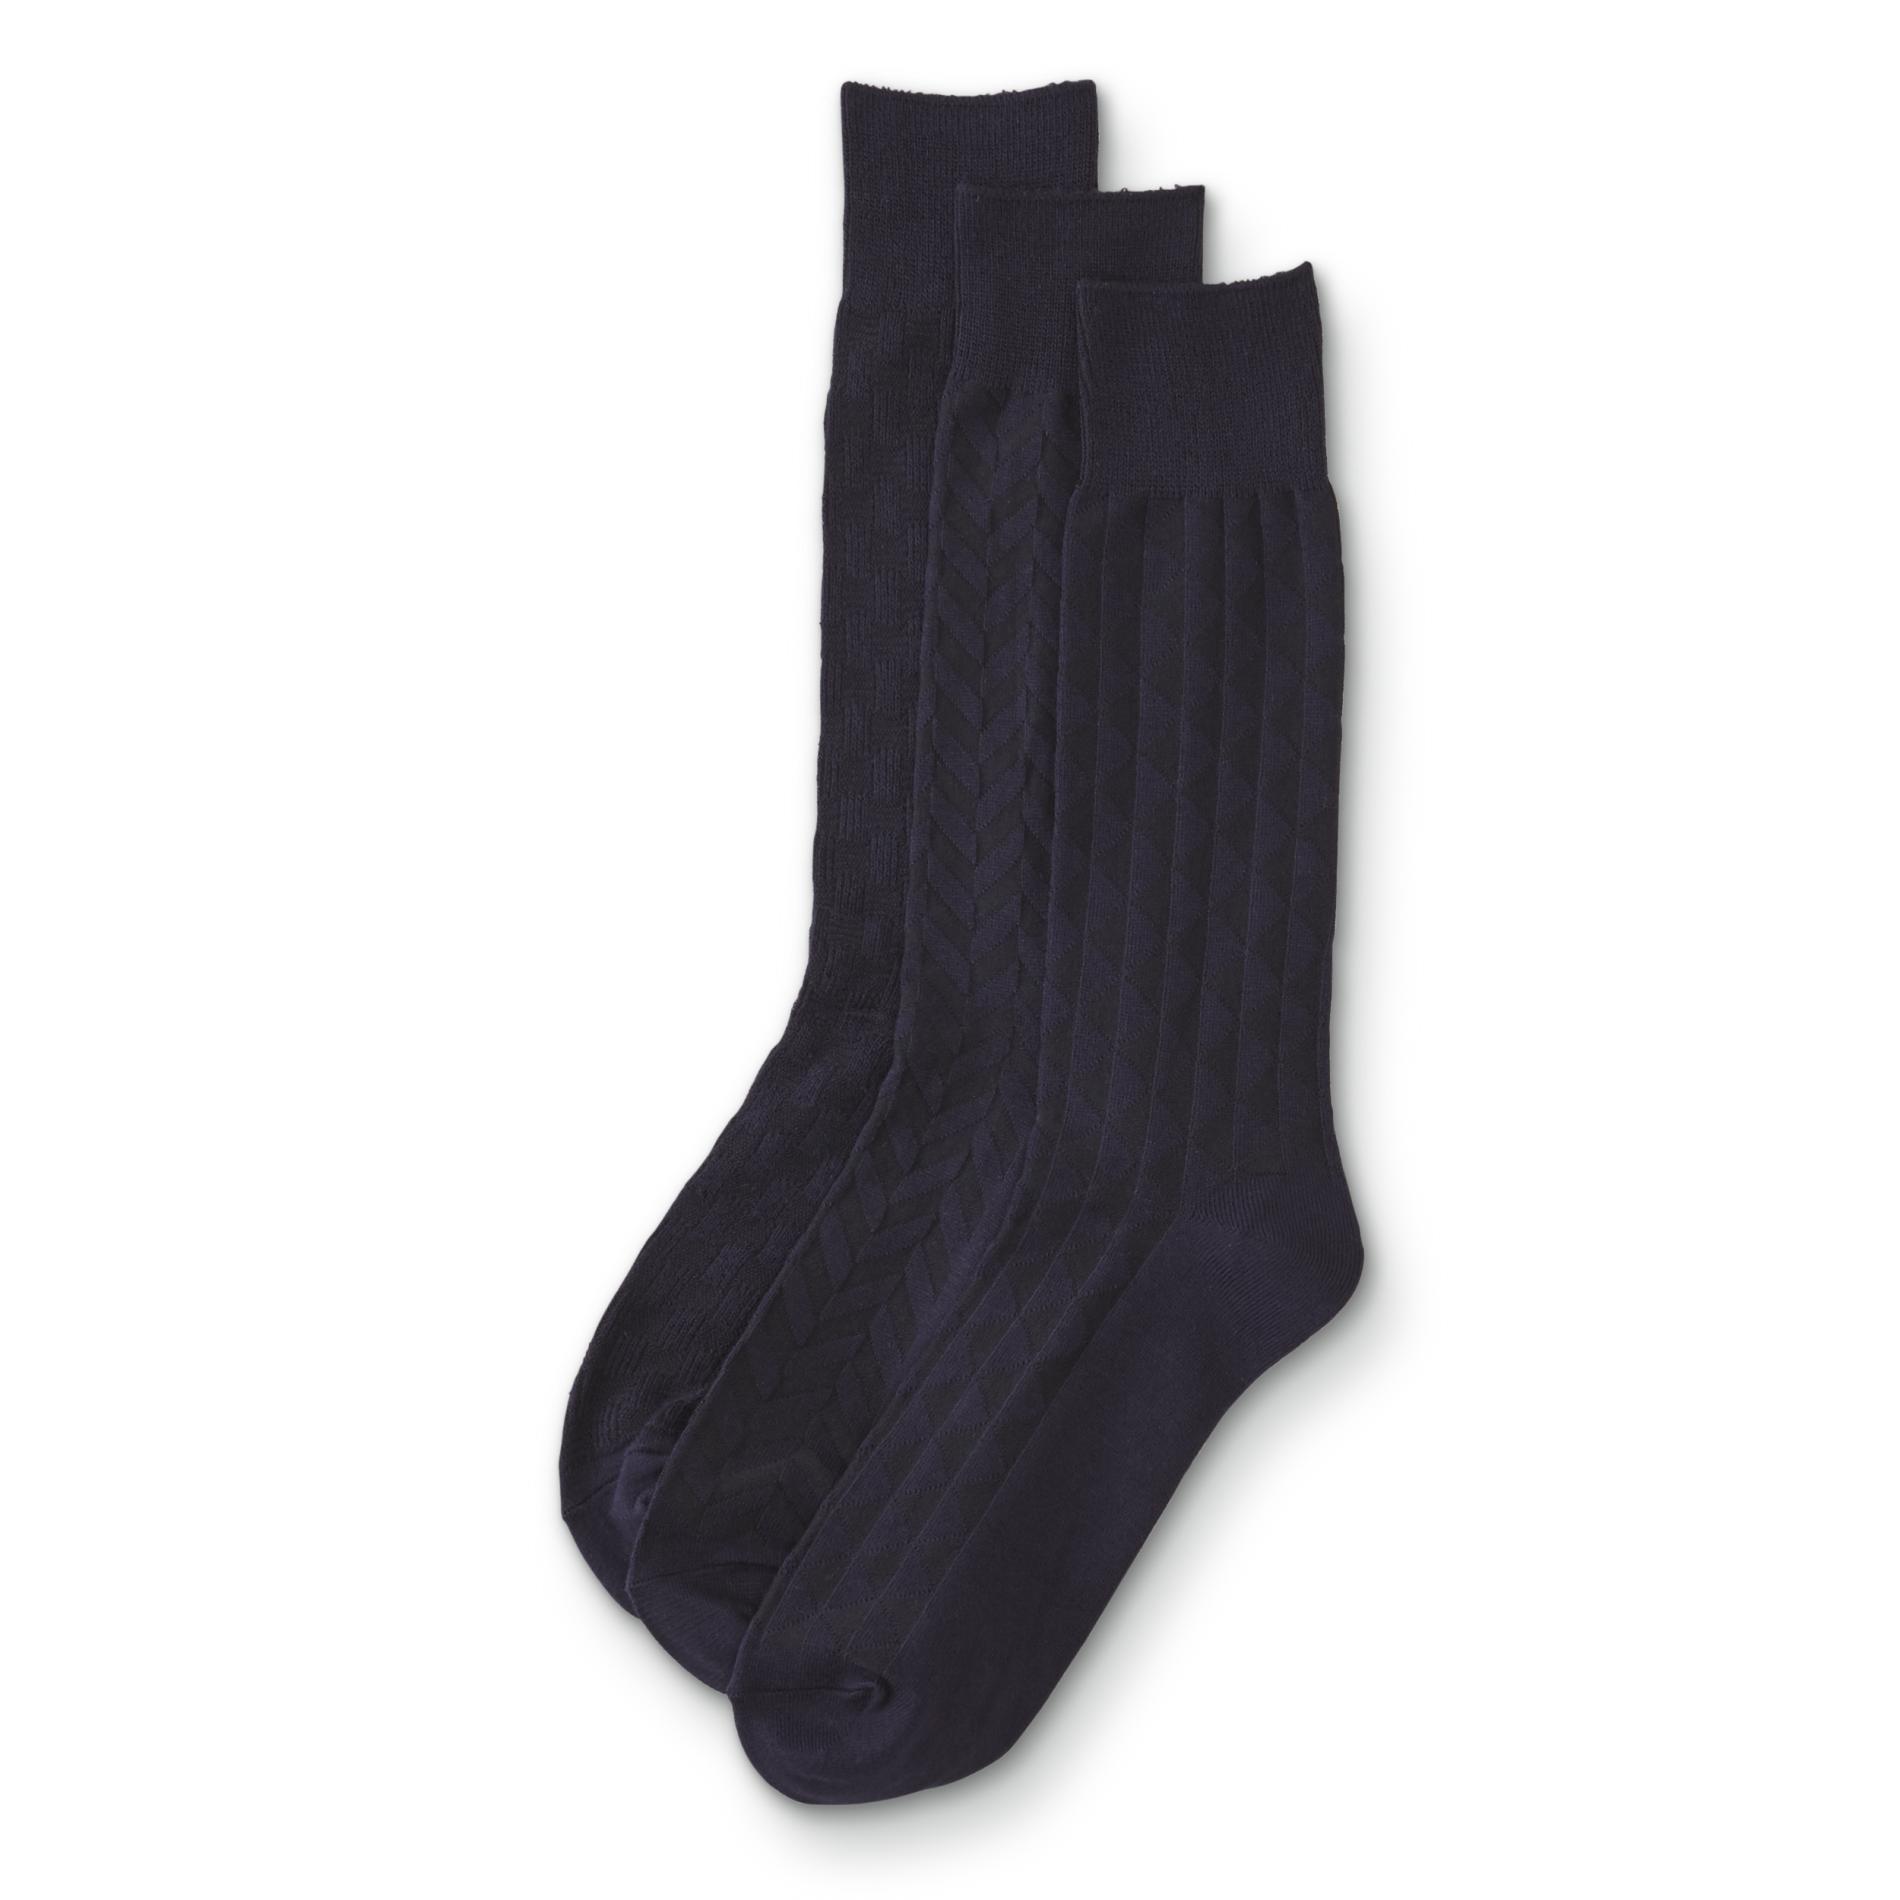 Basic Editions Men's 3-Pairs Crew Socks - Textured Patterns